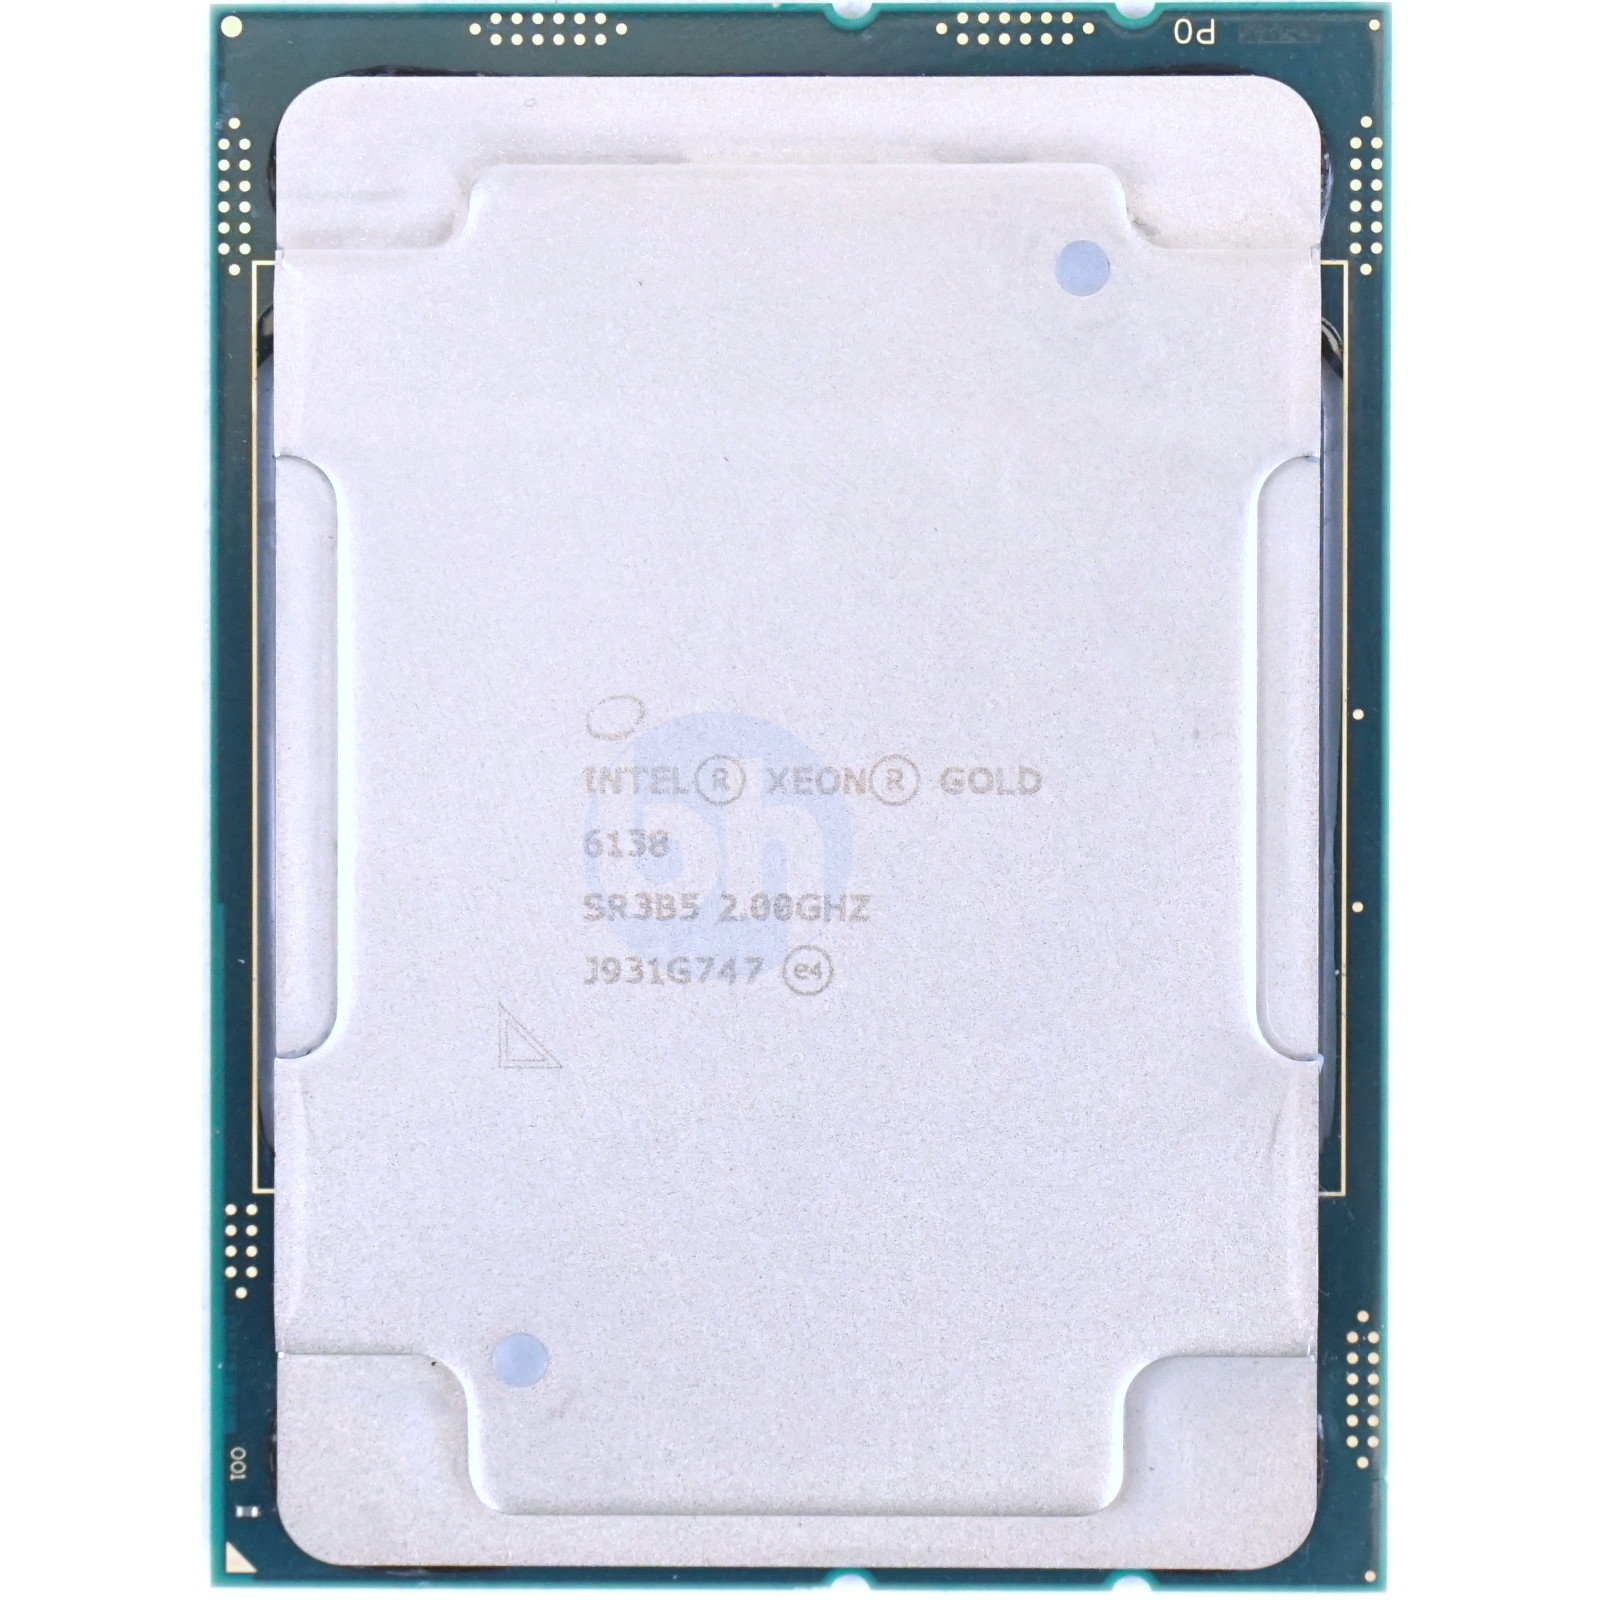 Intel Xeon Gold 6138 (SR3B5) 2.00GHz 20-Core LGA3647 125W 27.5MB Cache CPU